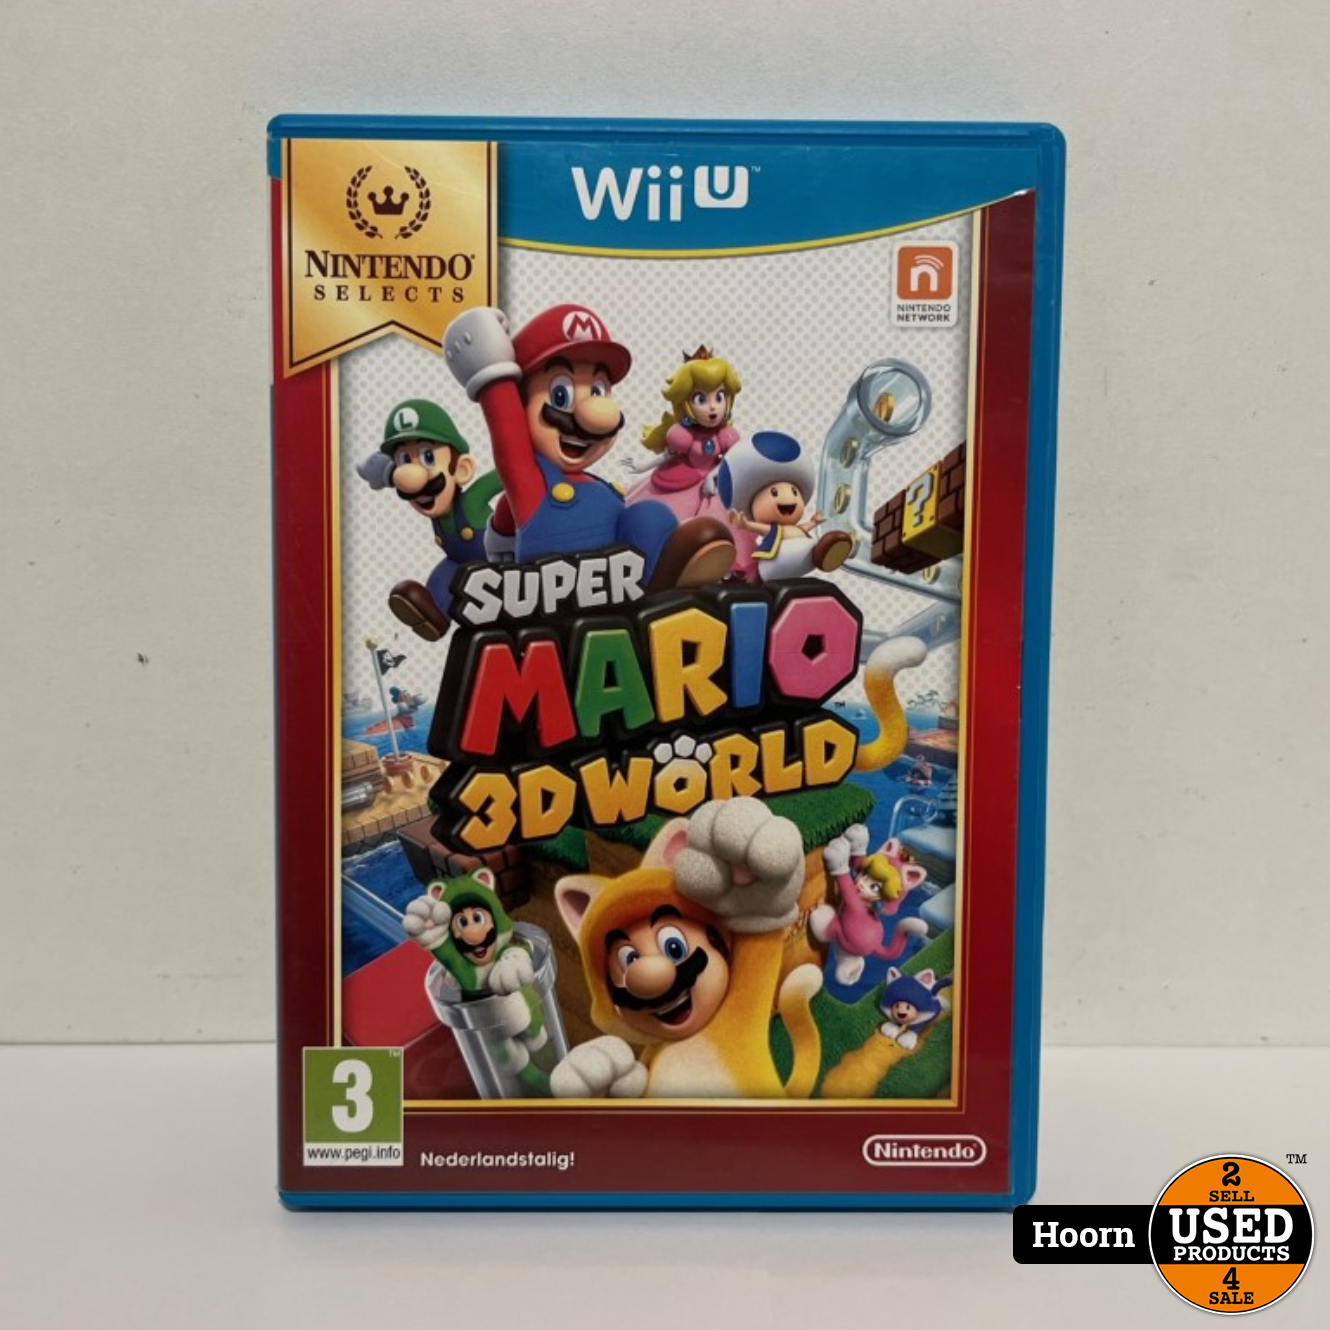 onder Vol Grommen Nintendo Wii U Game: Super Mario 3D World - Used Products Hoorn